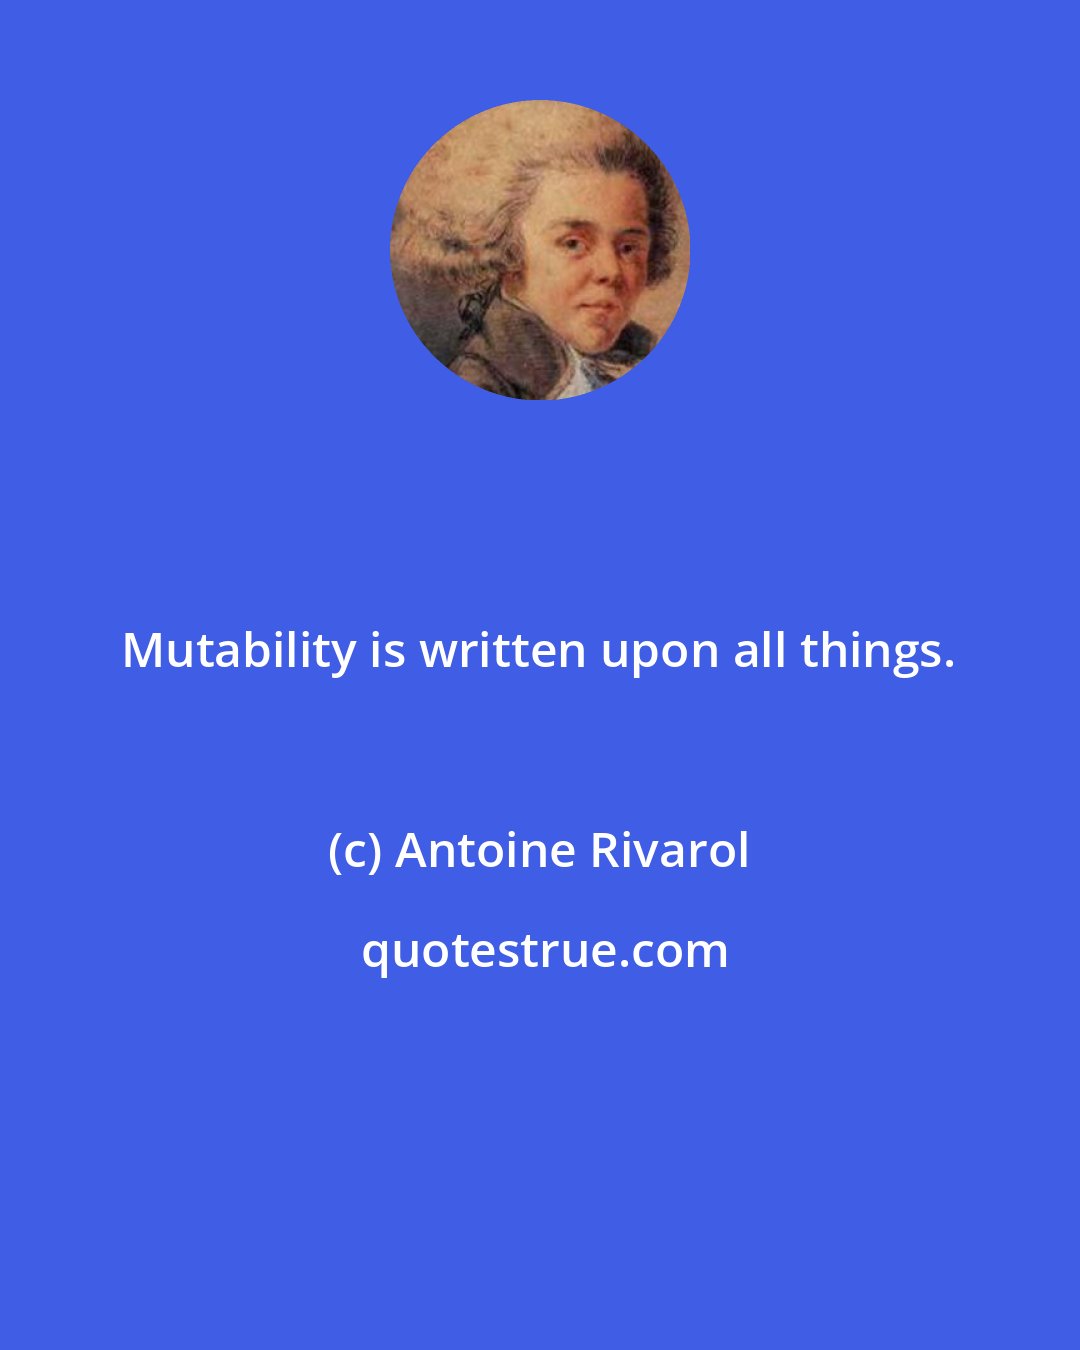 Antoine Rivarol: Mutability is written upon all things.